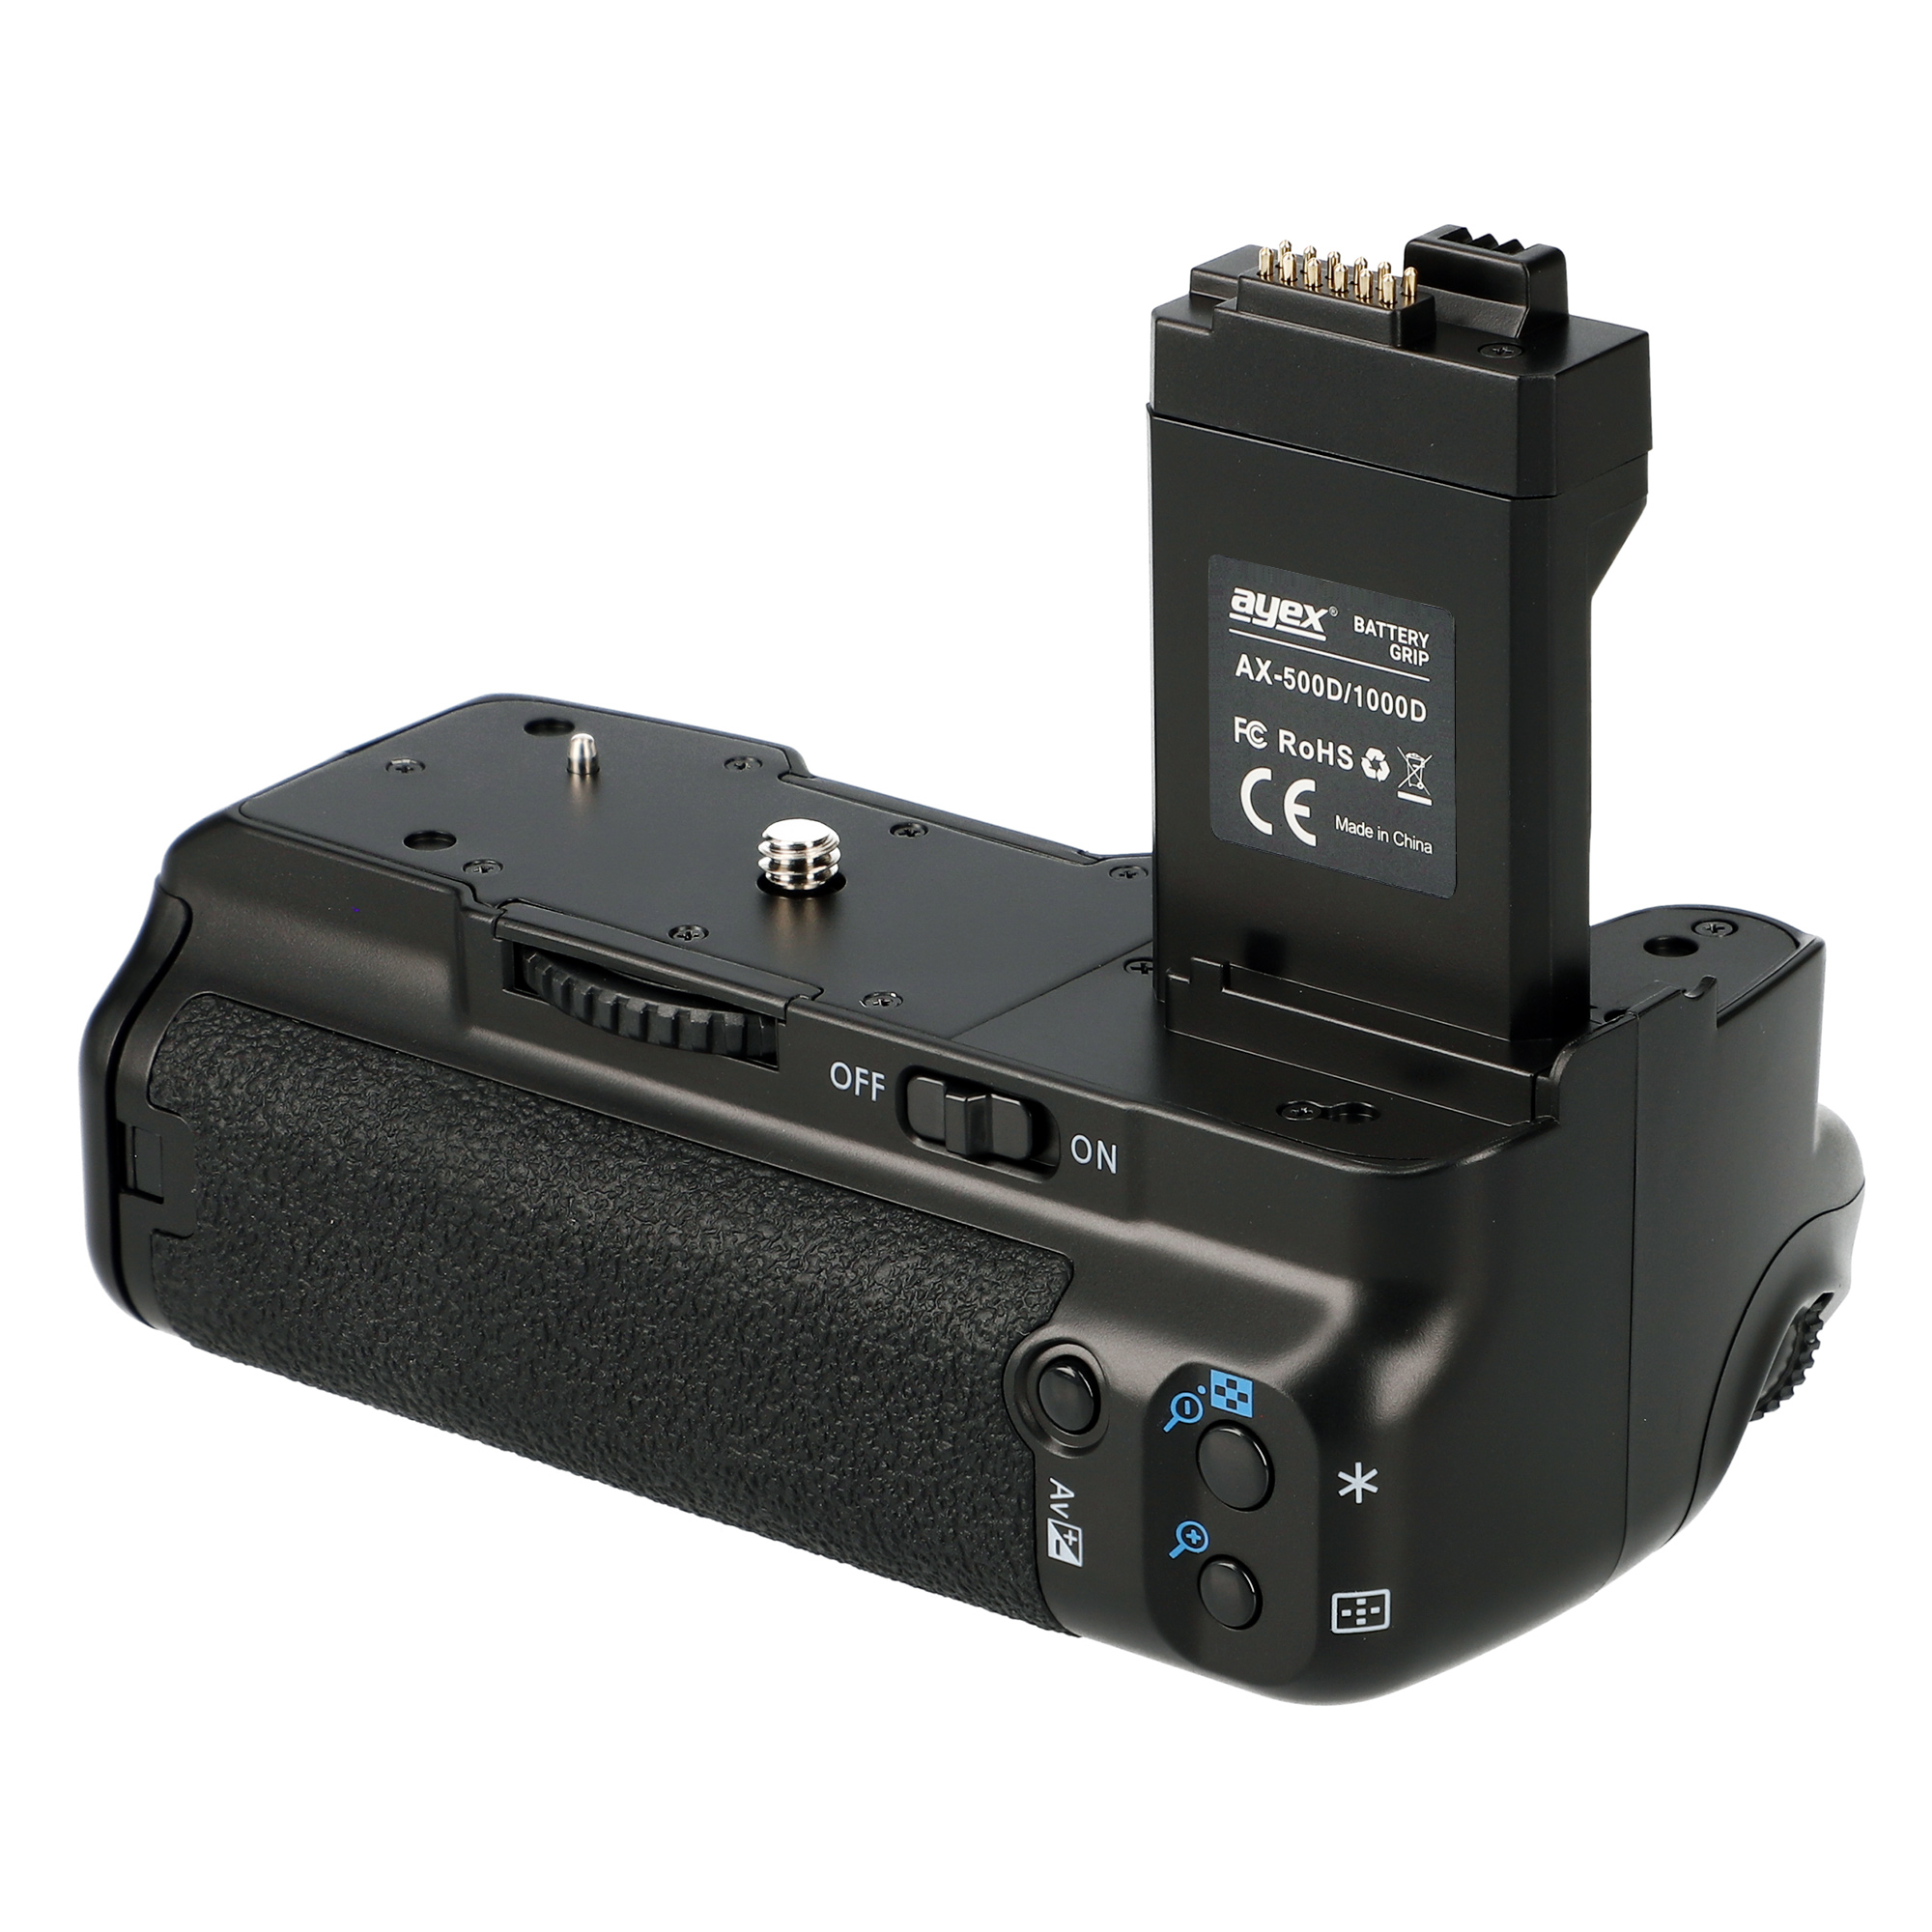 Batteriegriff, 450D EOS perfekt Canon BG-E5 500D Batteriegriff wie für AYEX Black Hochformat, 1000D